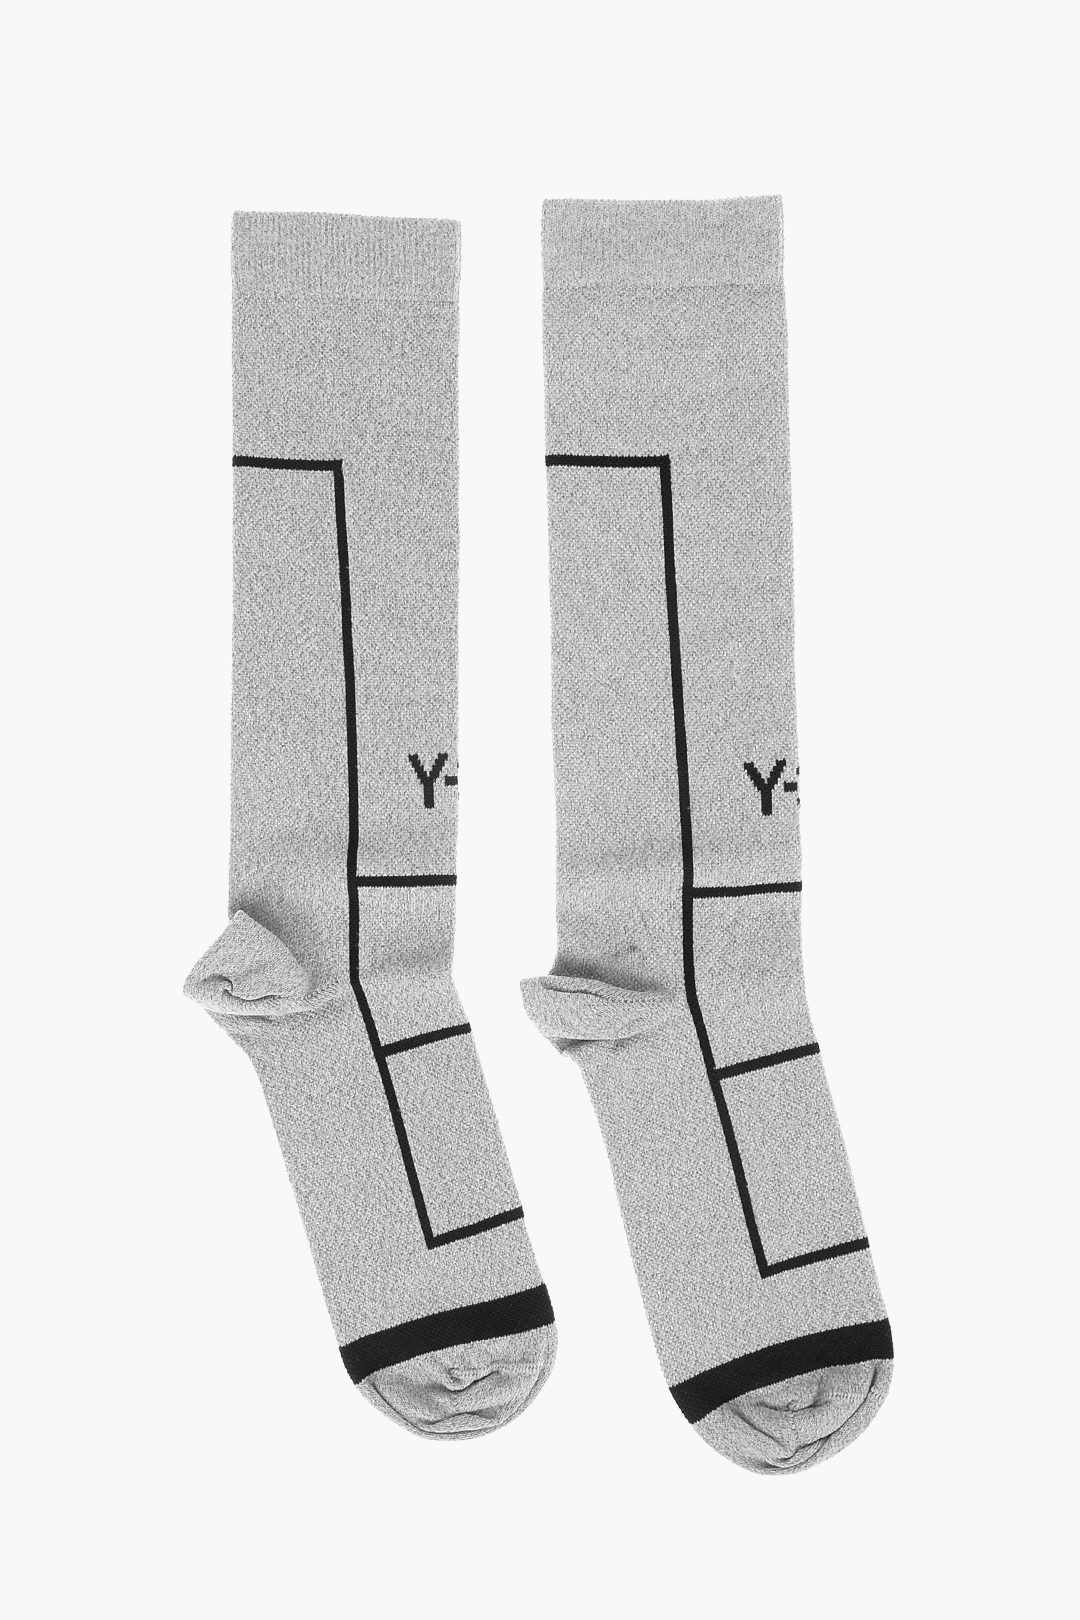 Y-3 by Yohji Yamamoto ADIDAS stretch long socks men women - Glamood Outlet